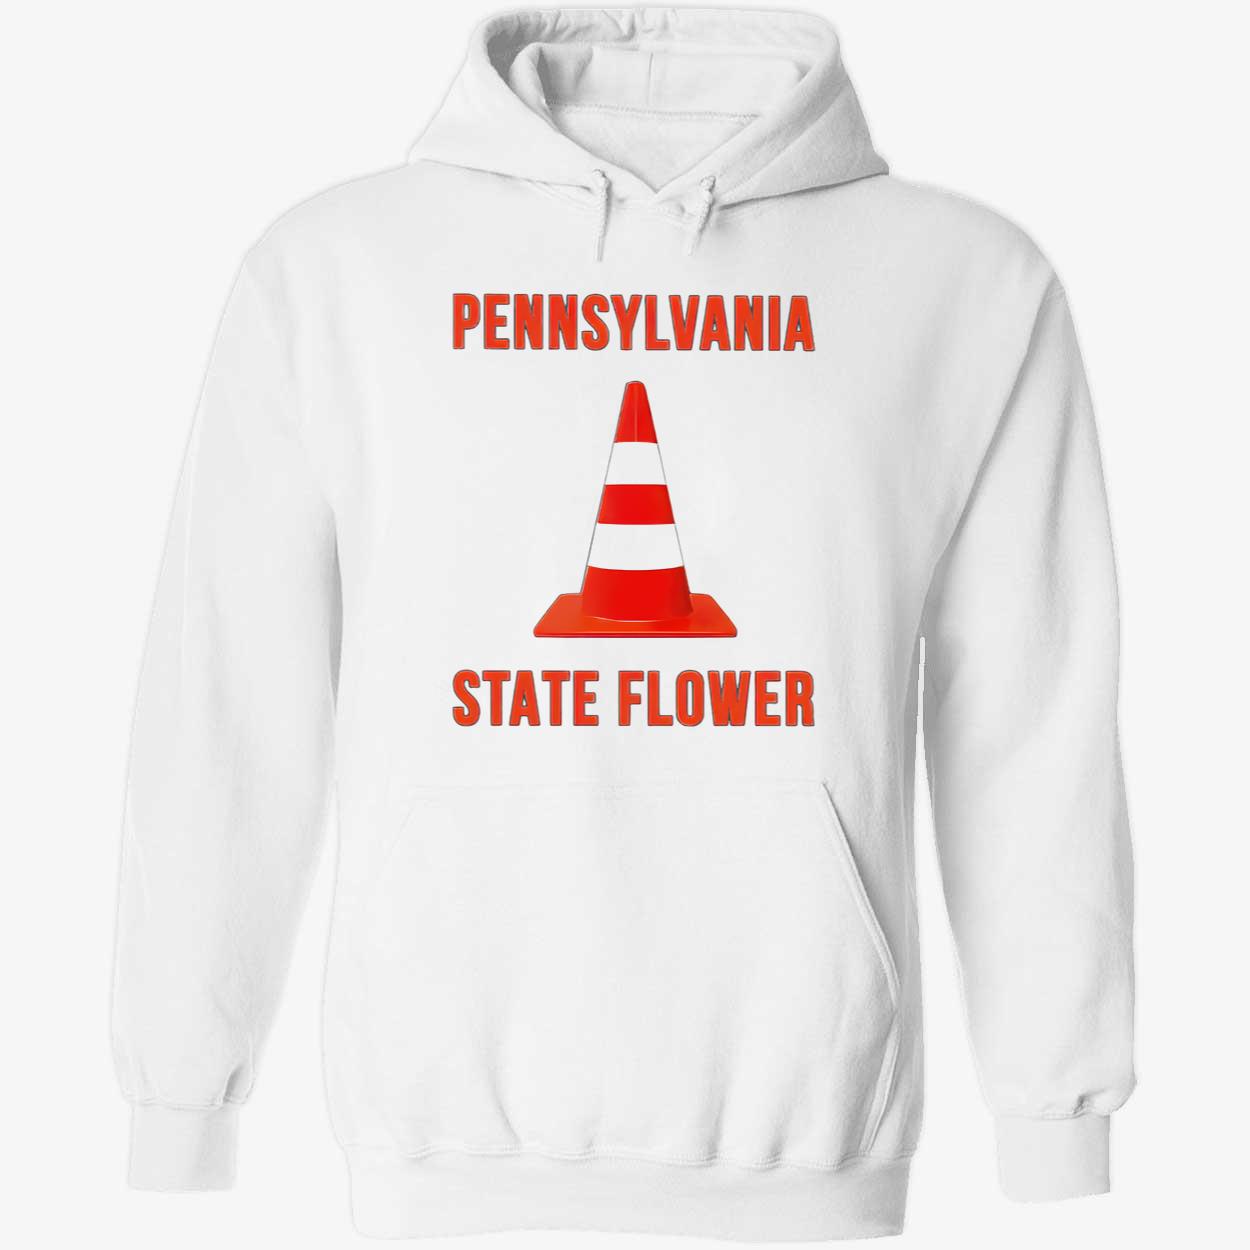 Pennsylvania State Flower Shirt